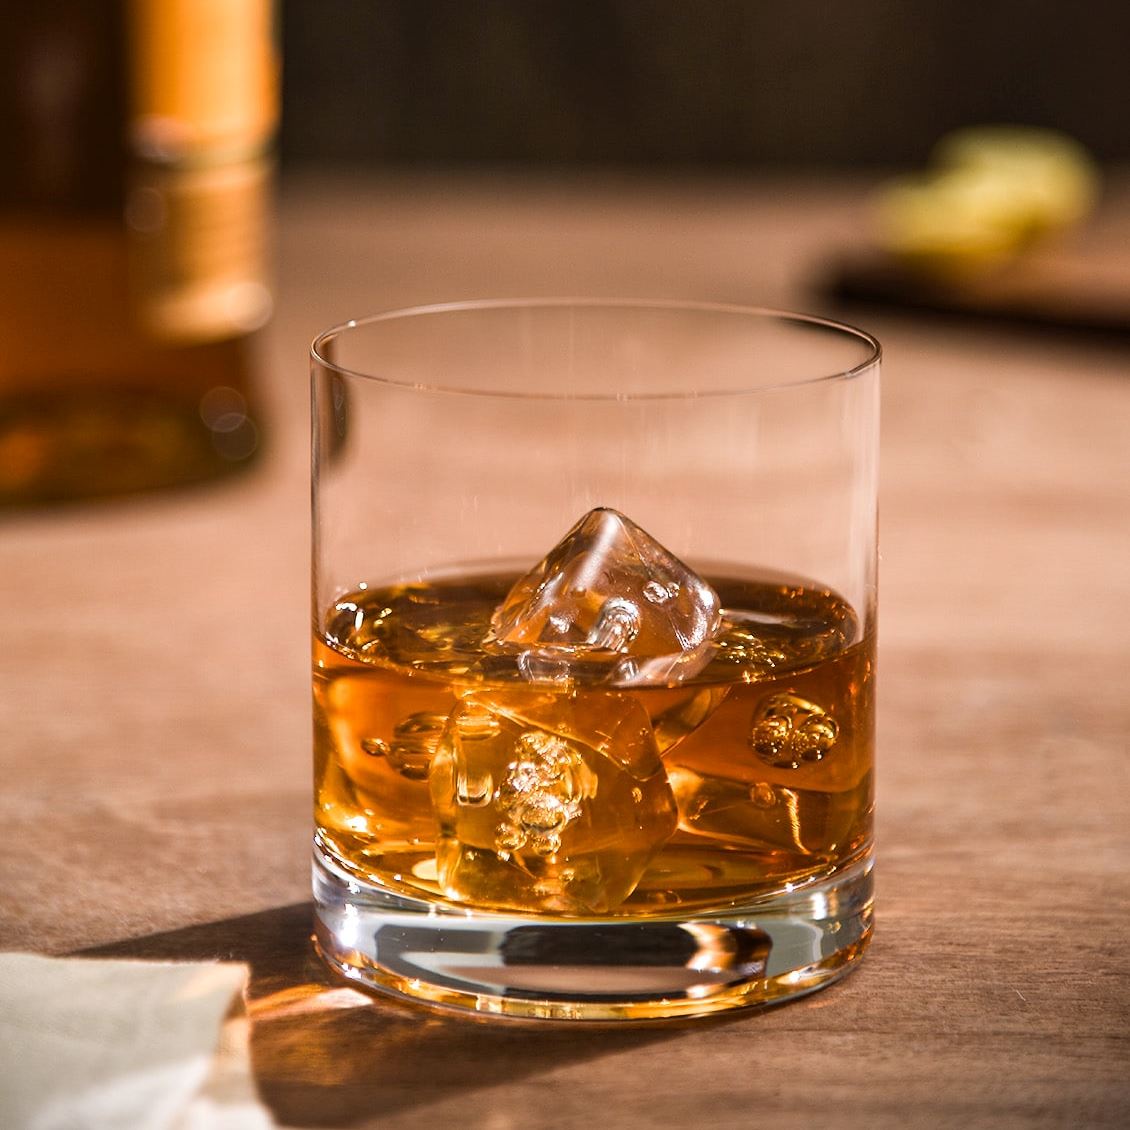 Modern design whiskey glass perfect for fine spirits